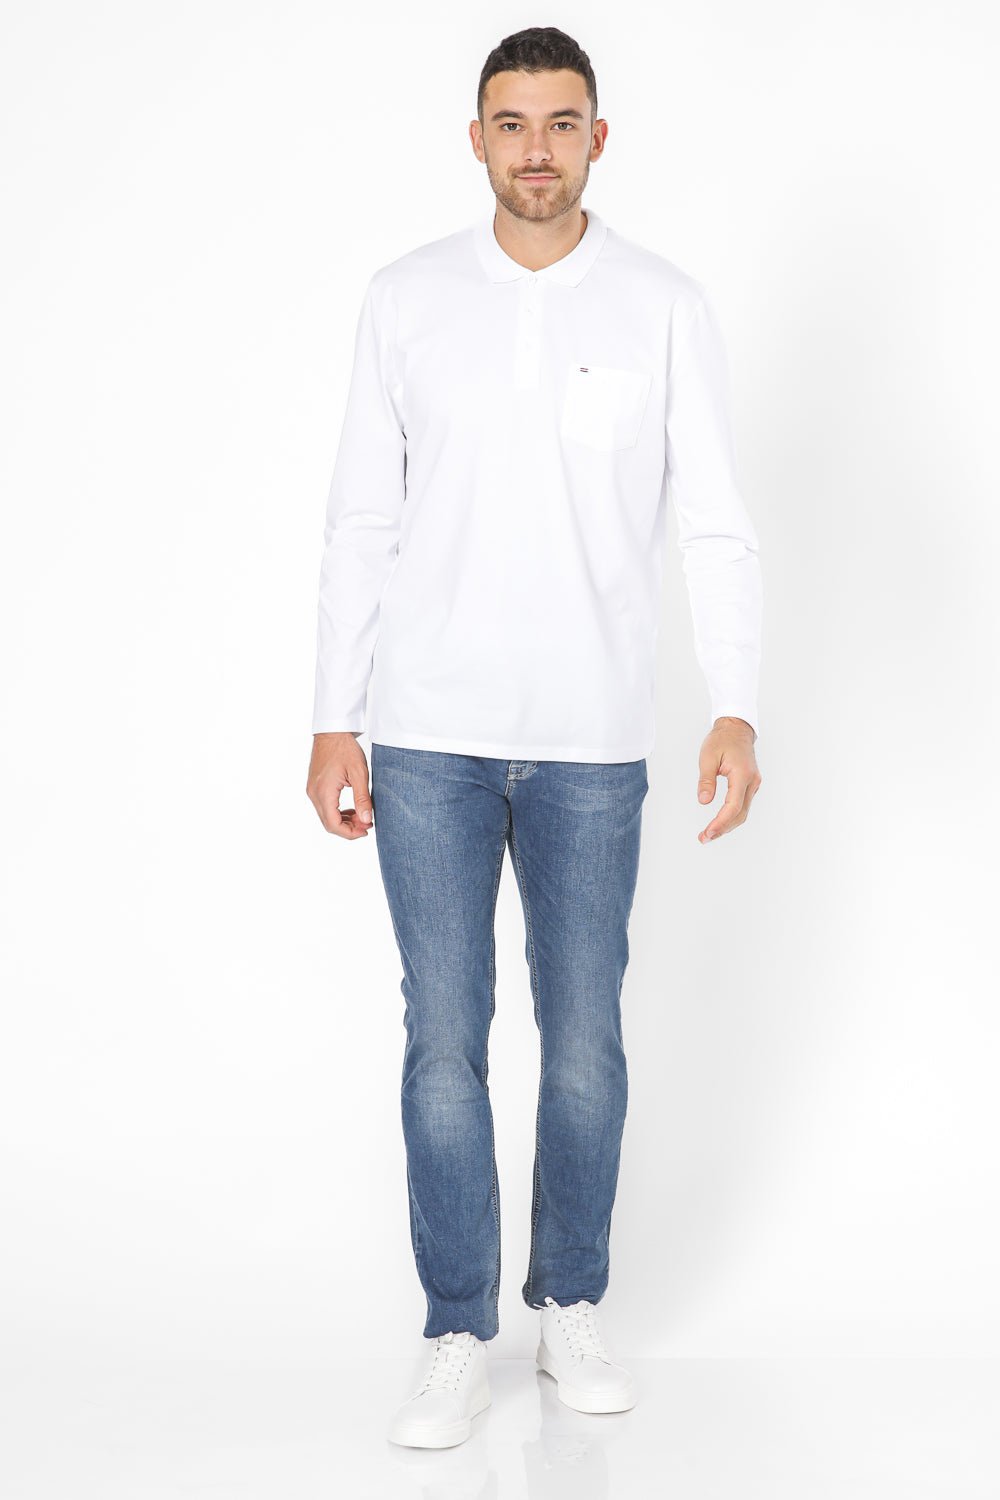 SCORCHER - חולצת פולו ארוכה בצבע לבן - MASHBIR//365